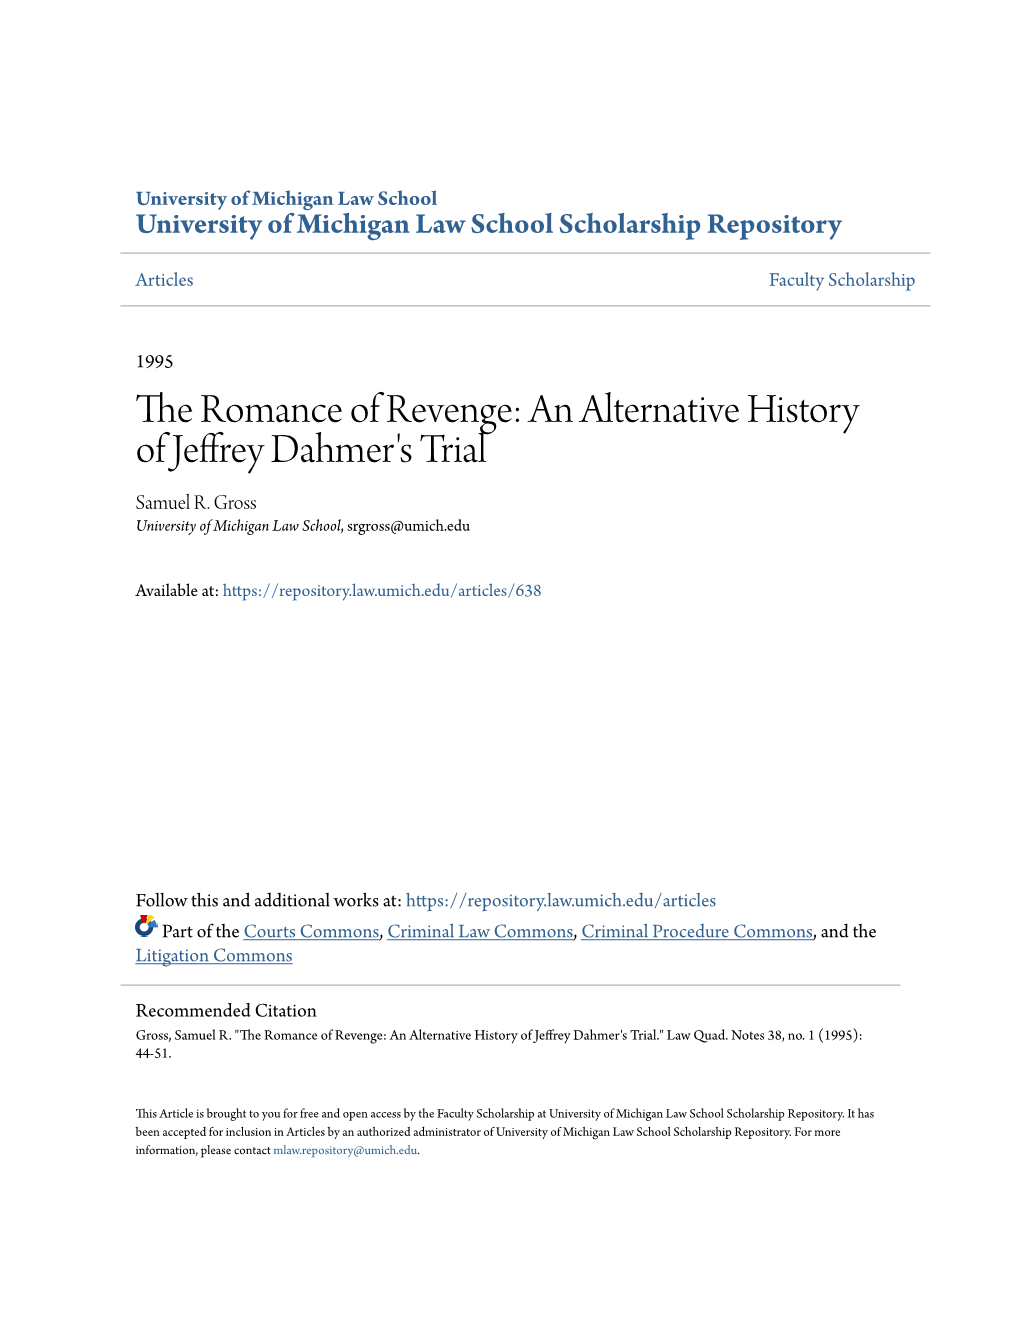 An Alternative History of Jeffrey Dahmer's Trial Samuel R